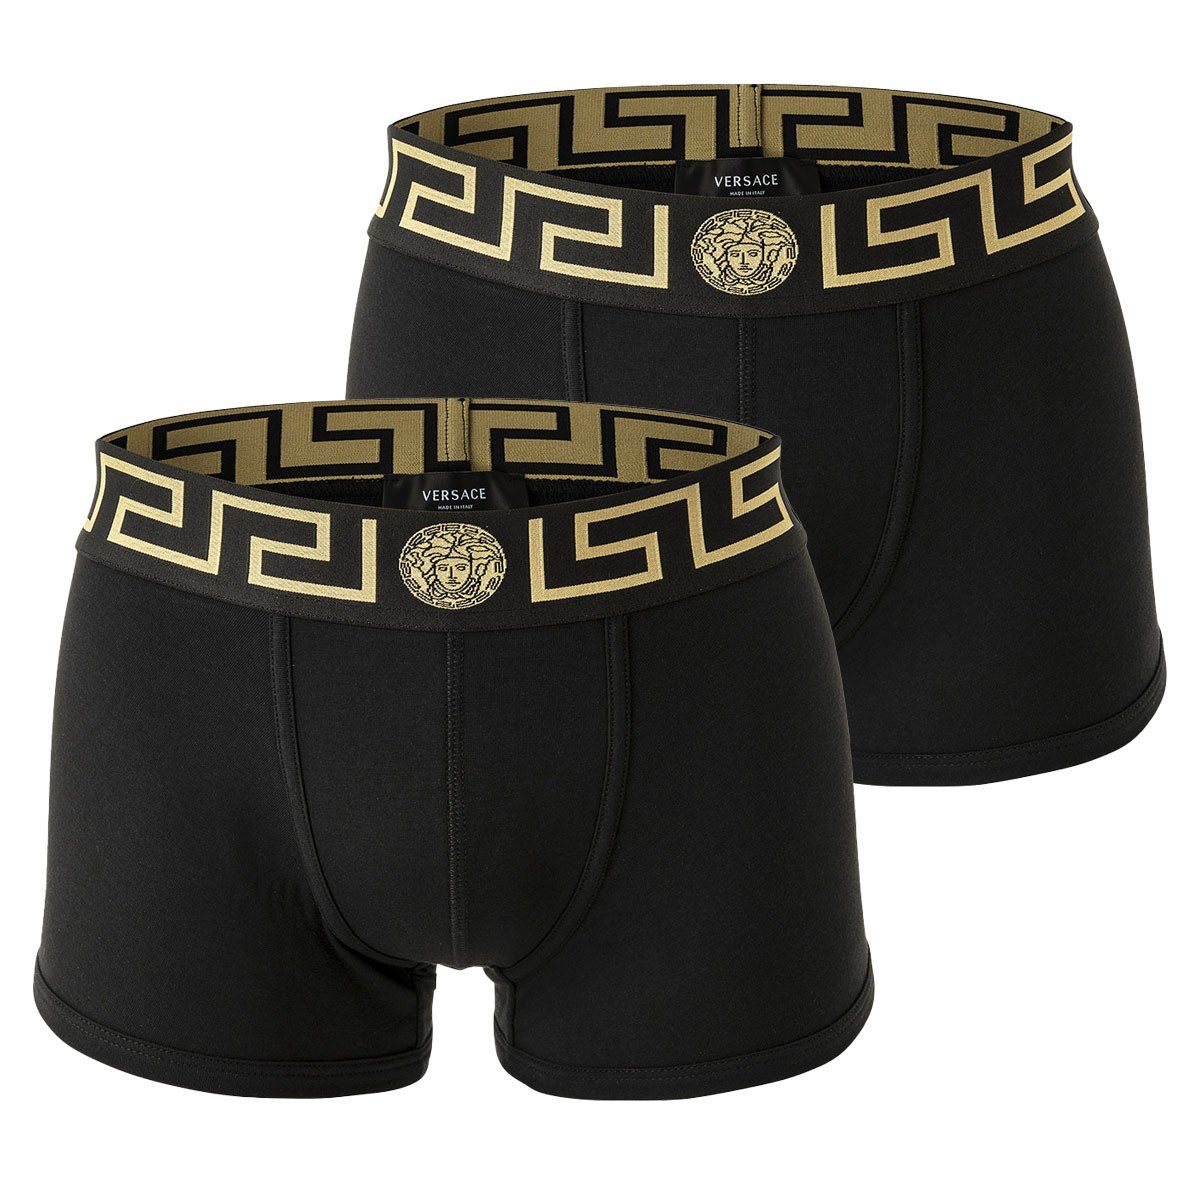 Versace Boxer Herren Boxer Shorts, 2er Pack - Trunk Schwarz/Gold | Boxershorts